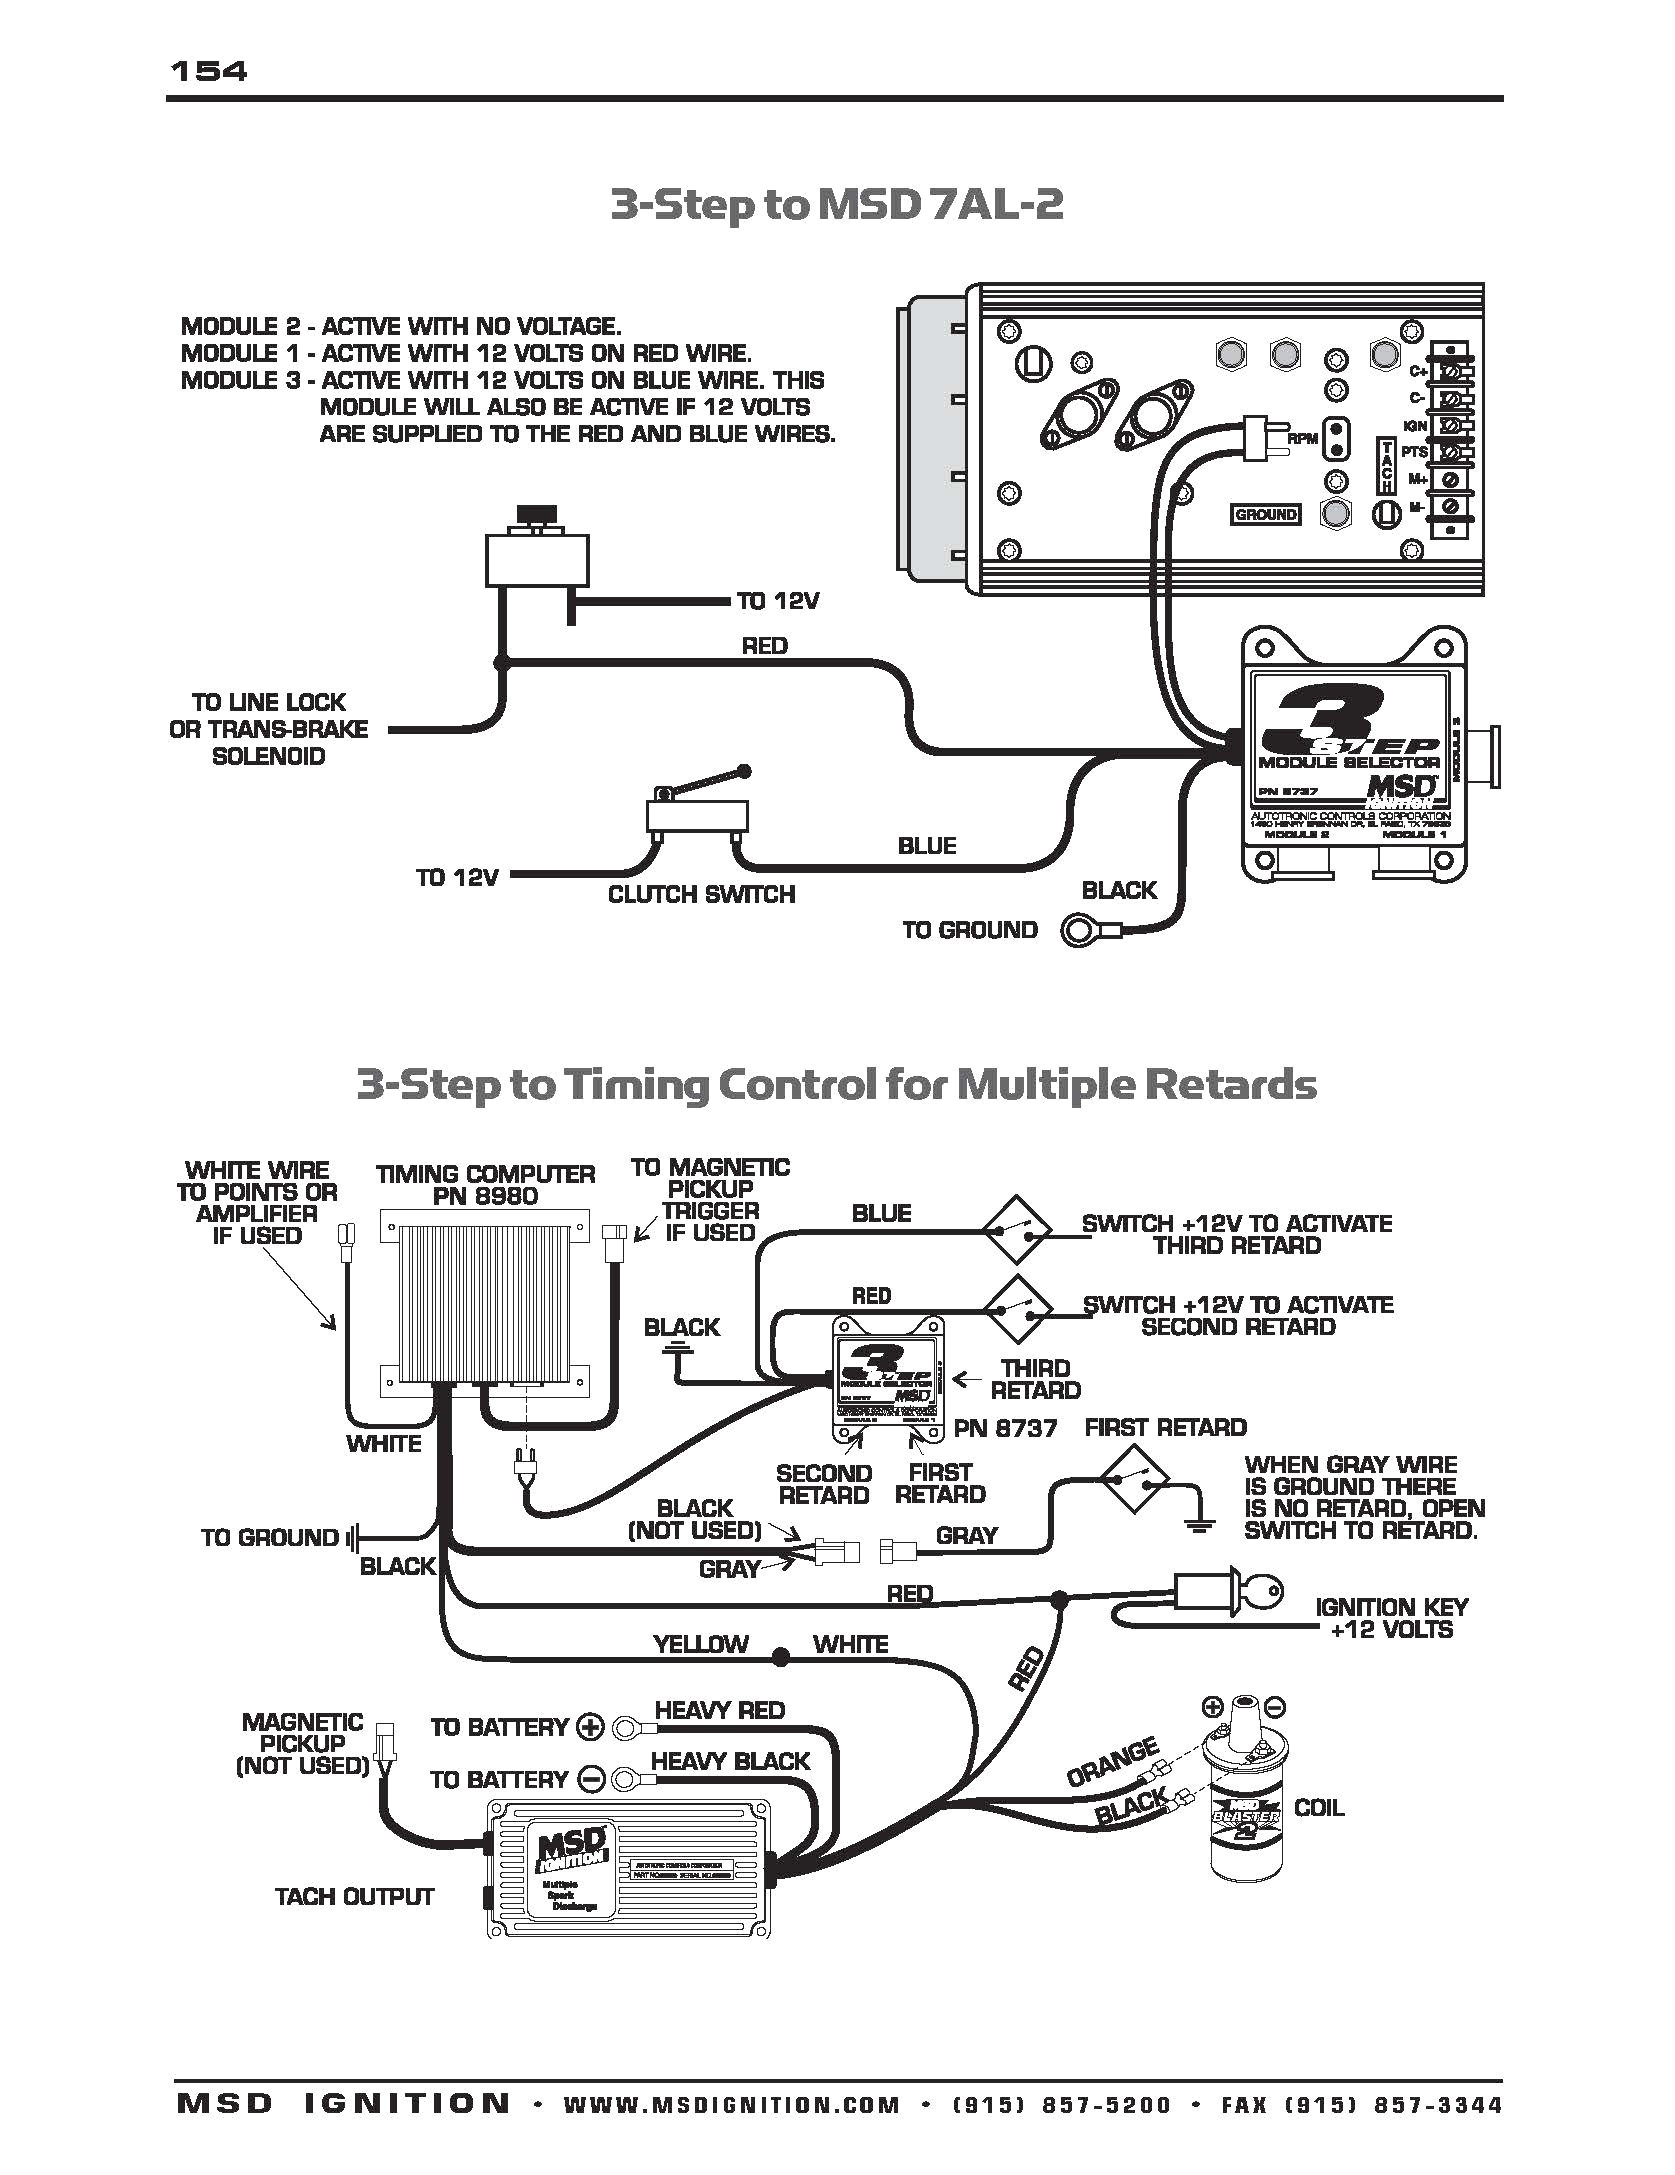 msd 7 wiring diagram wiring diagram msd digital 7 plus wiring diagram msd 5 wiring diagram